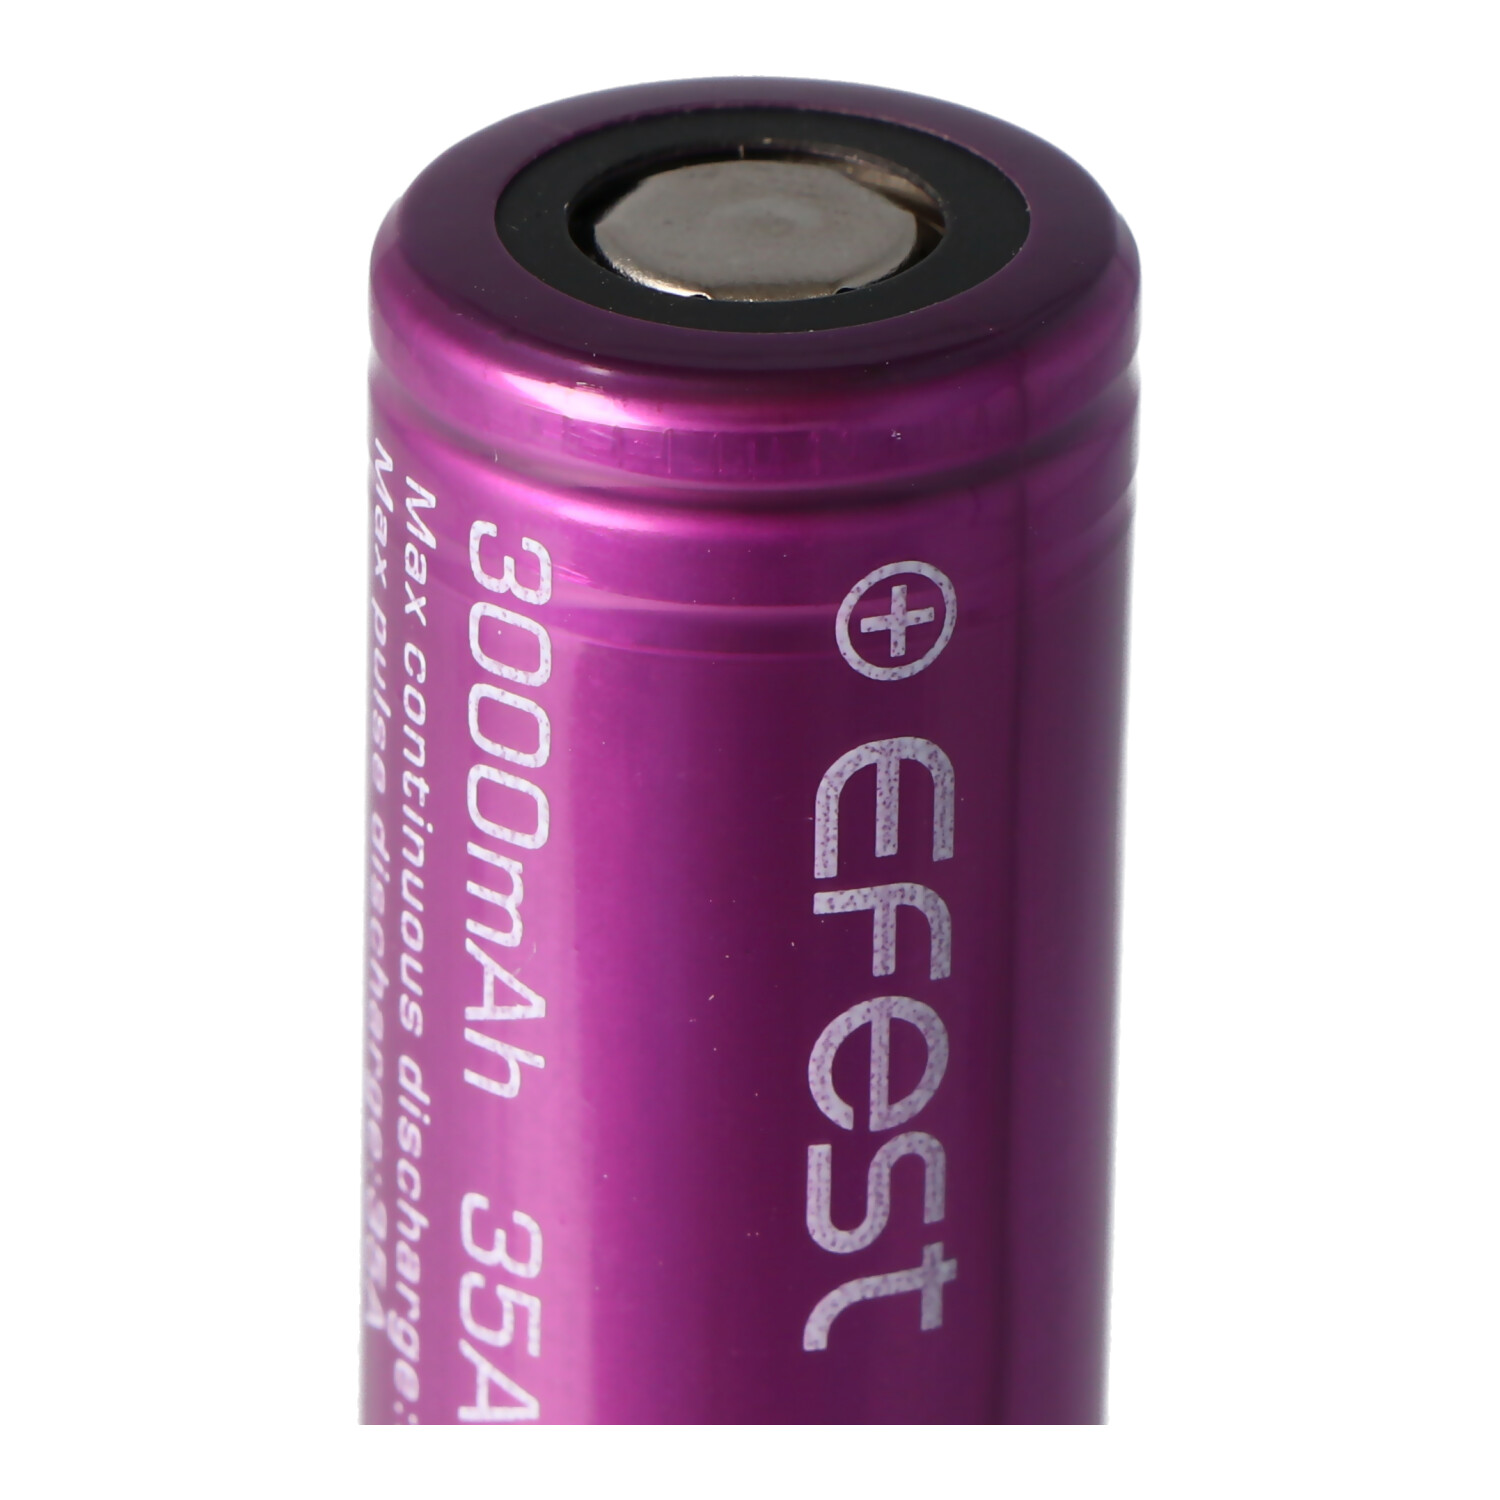 Efest Purple IMR 18650 3000mAh 3,6V - 3,7V min. 2900mAh typ. 3000mAh maximal 35A Stromabgabe (Flat Top)